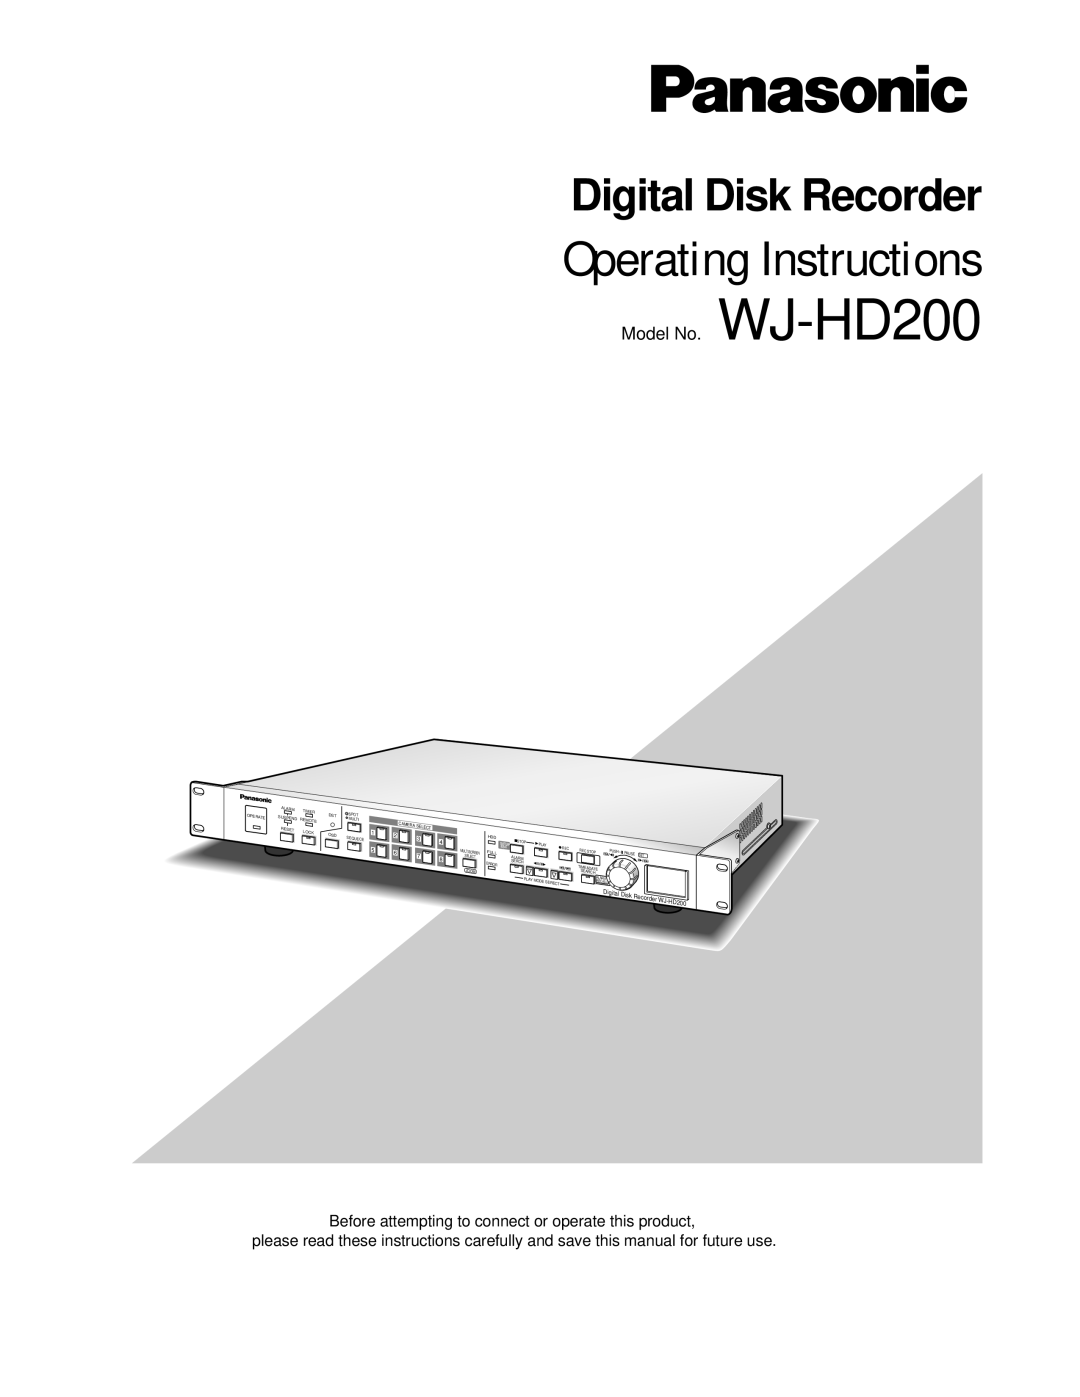 Panasonic manual Operating Instructions, Digital Disk Recorder, Model No. WJ-HD200 